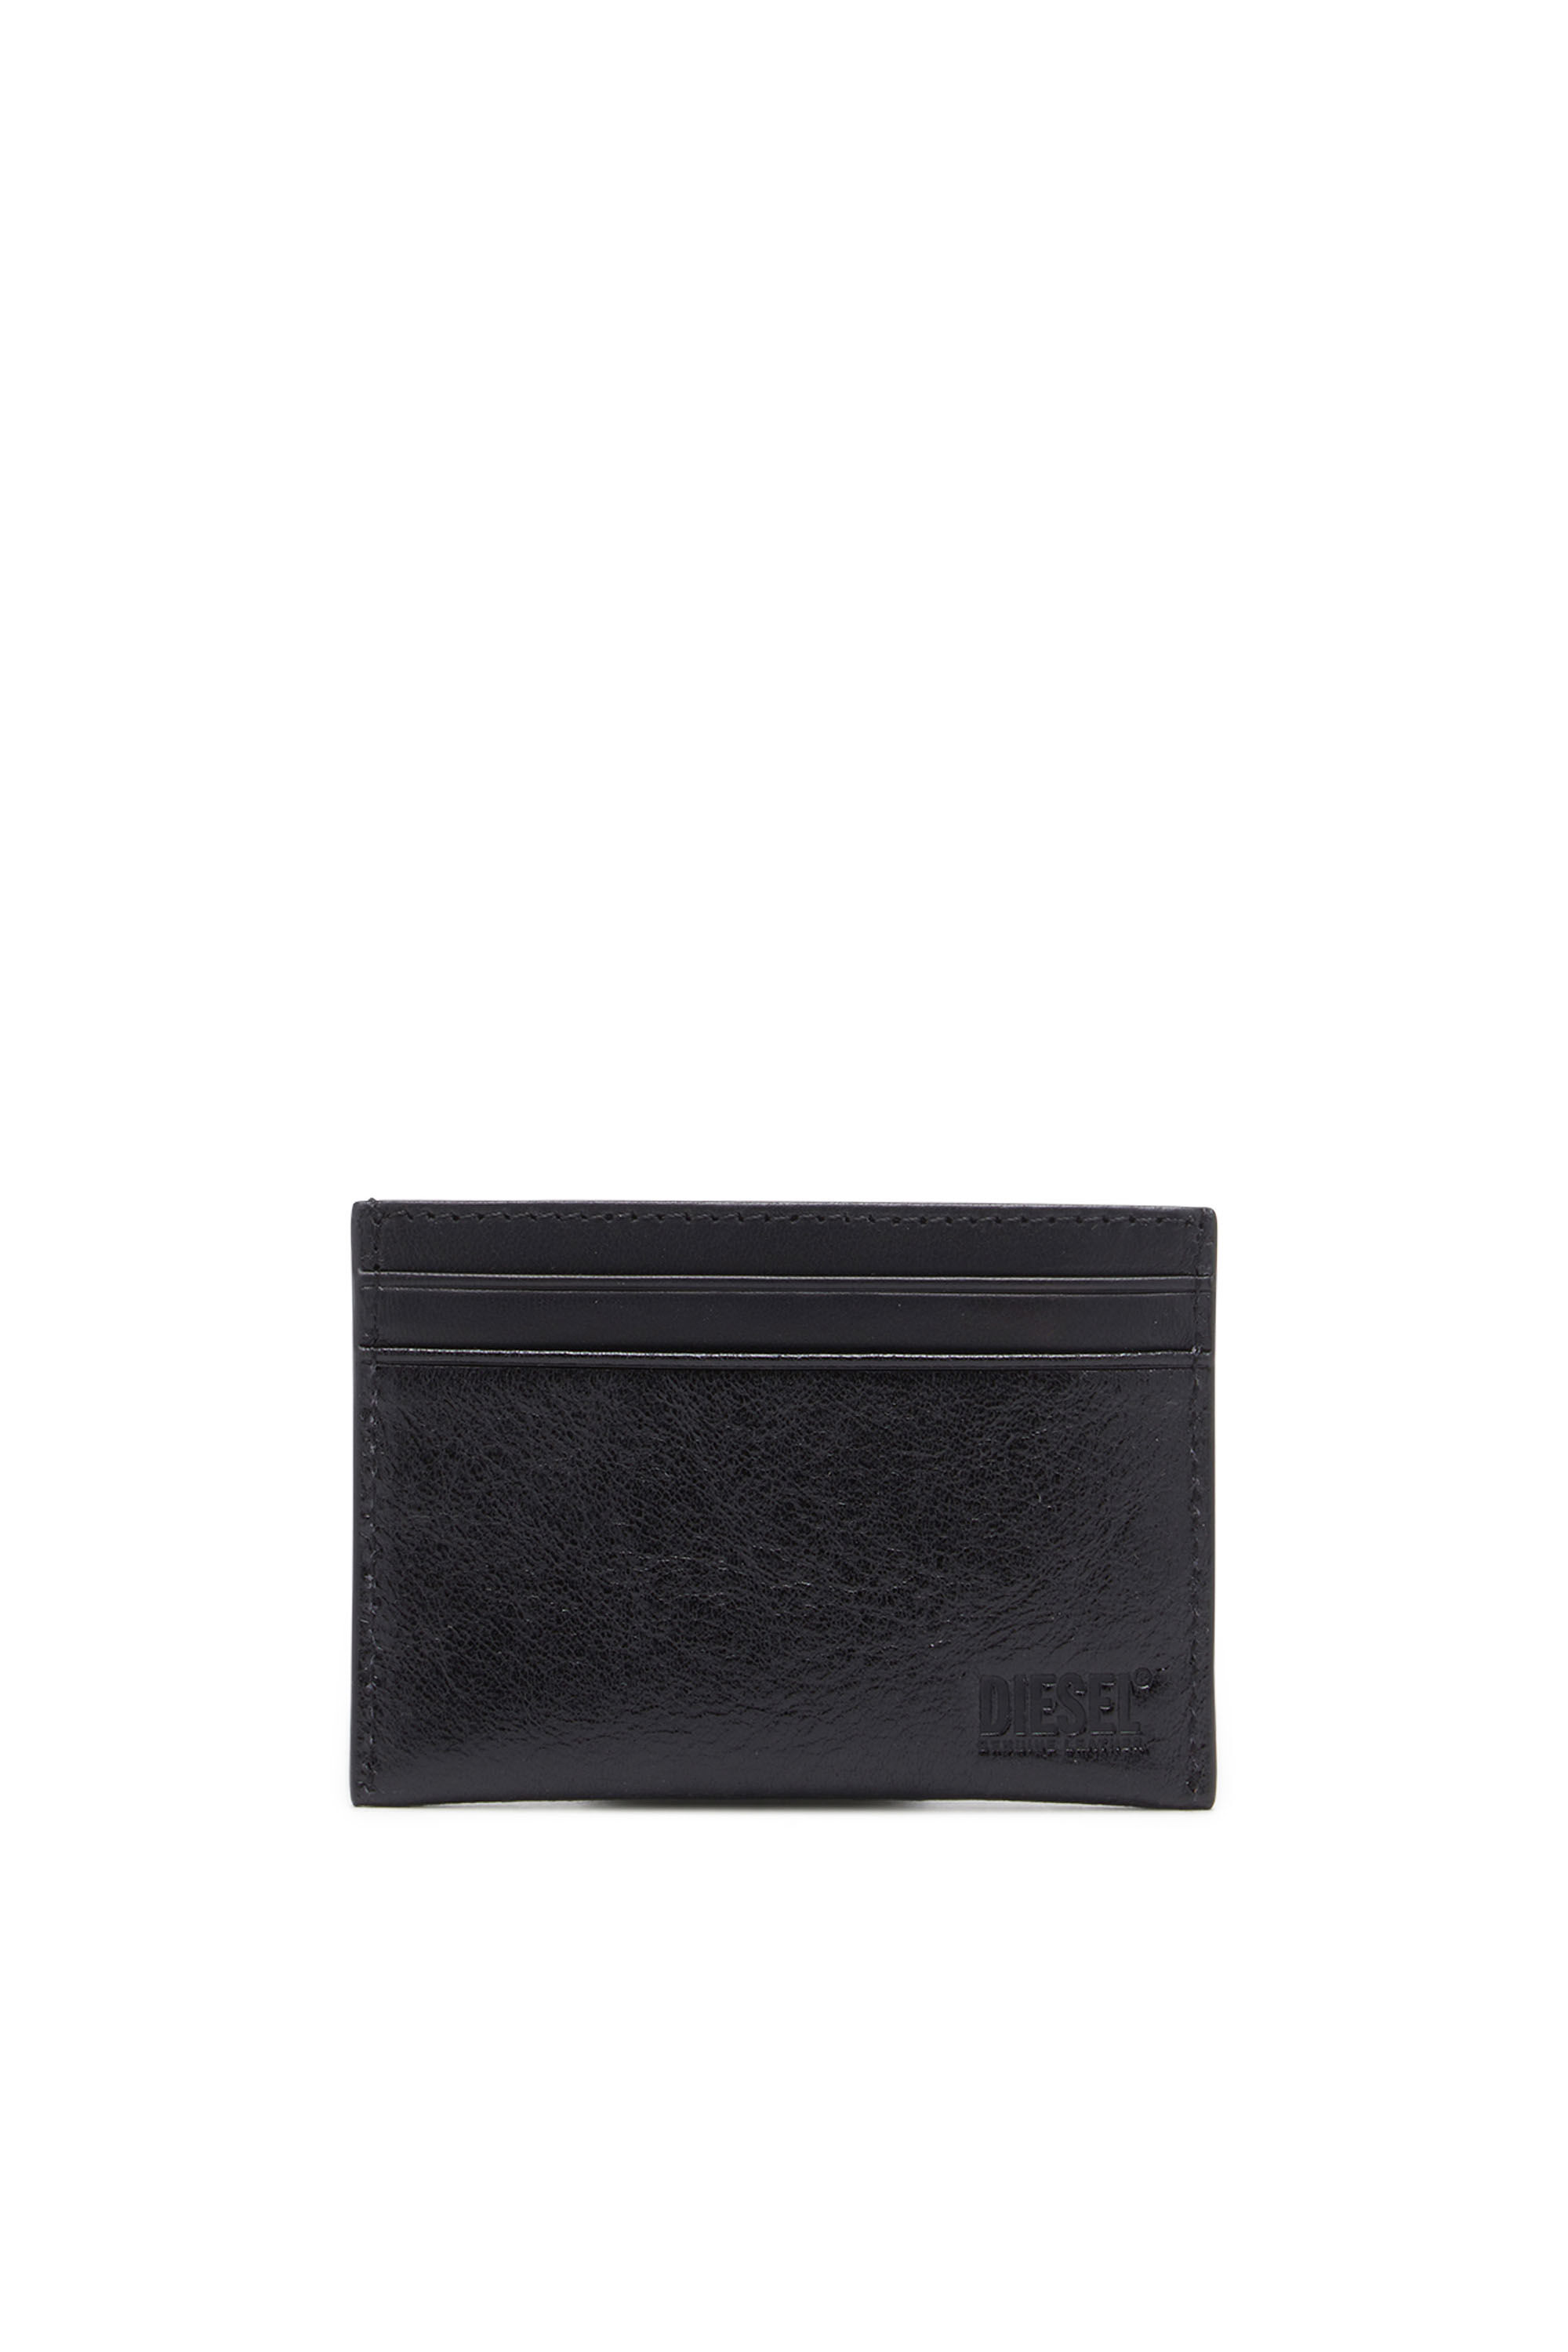 Men's Leather bi-fold wallet with red D plaque | Diesel